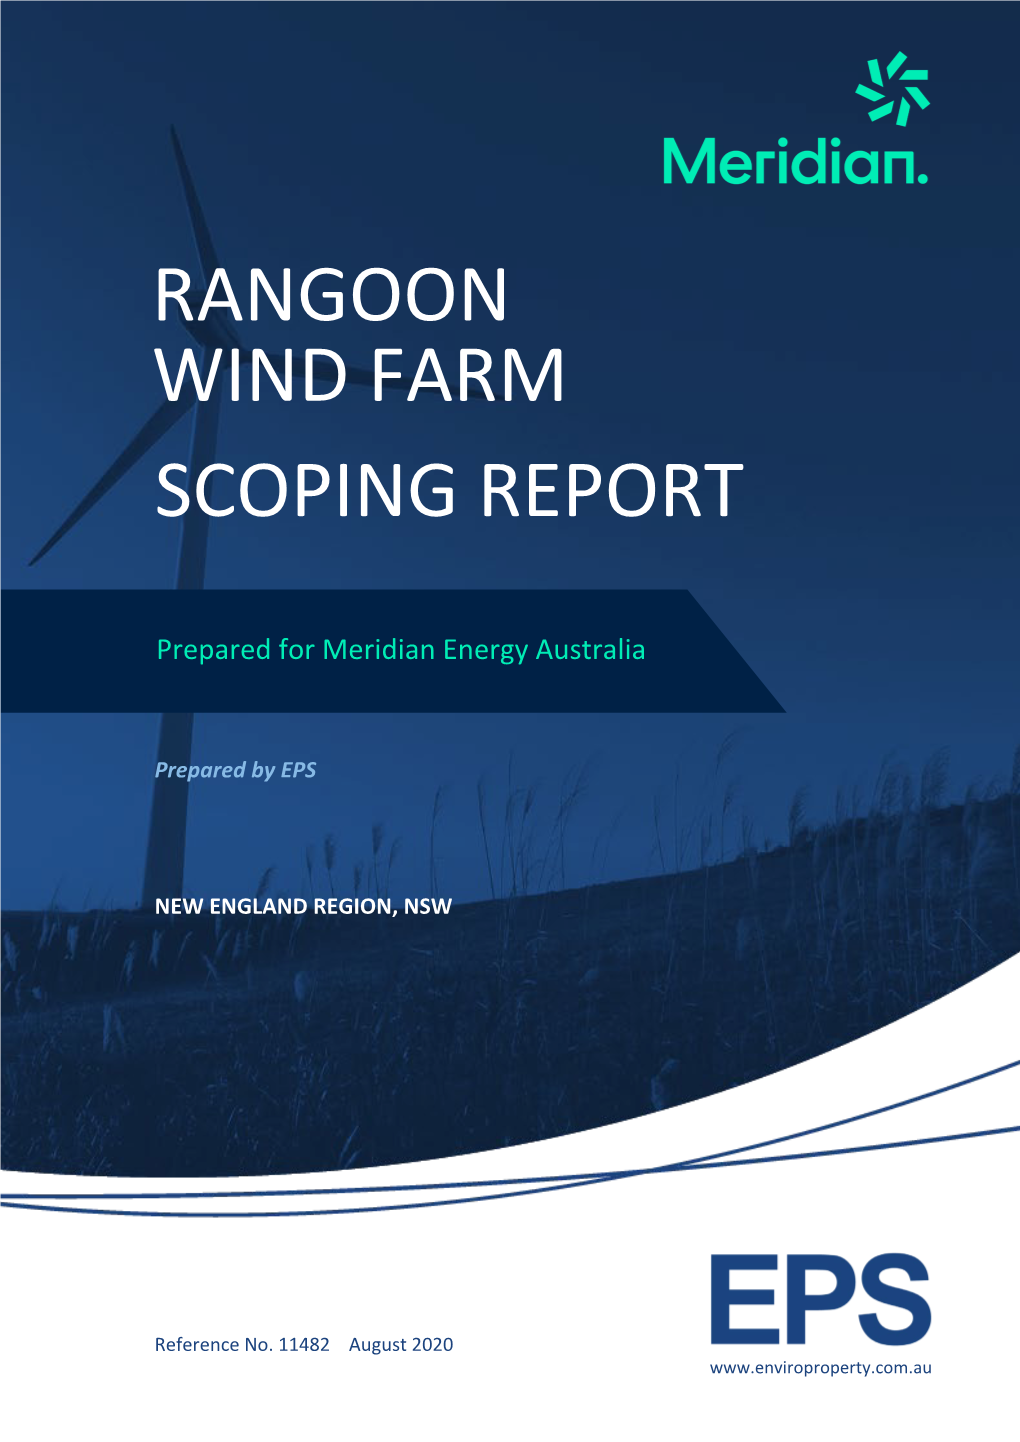 Rangoon Wind Farm Scoping Report